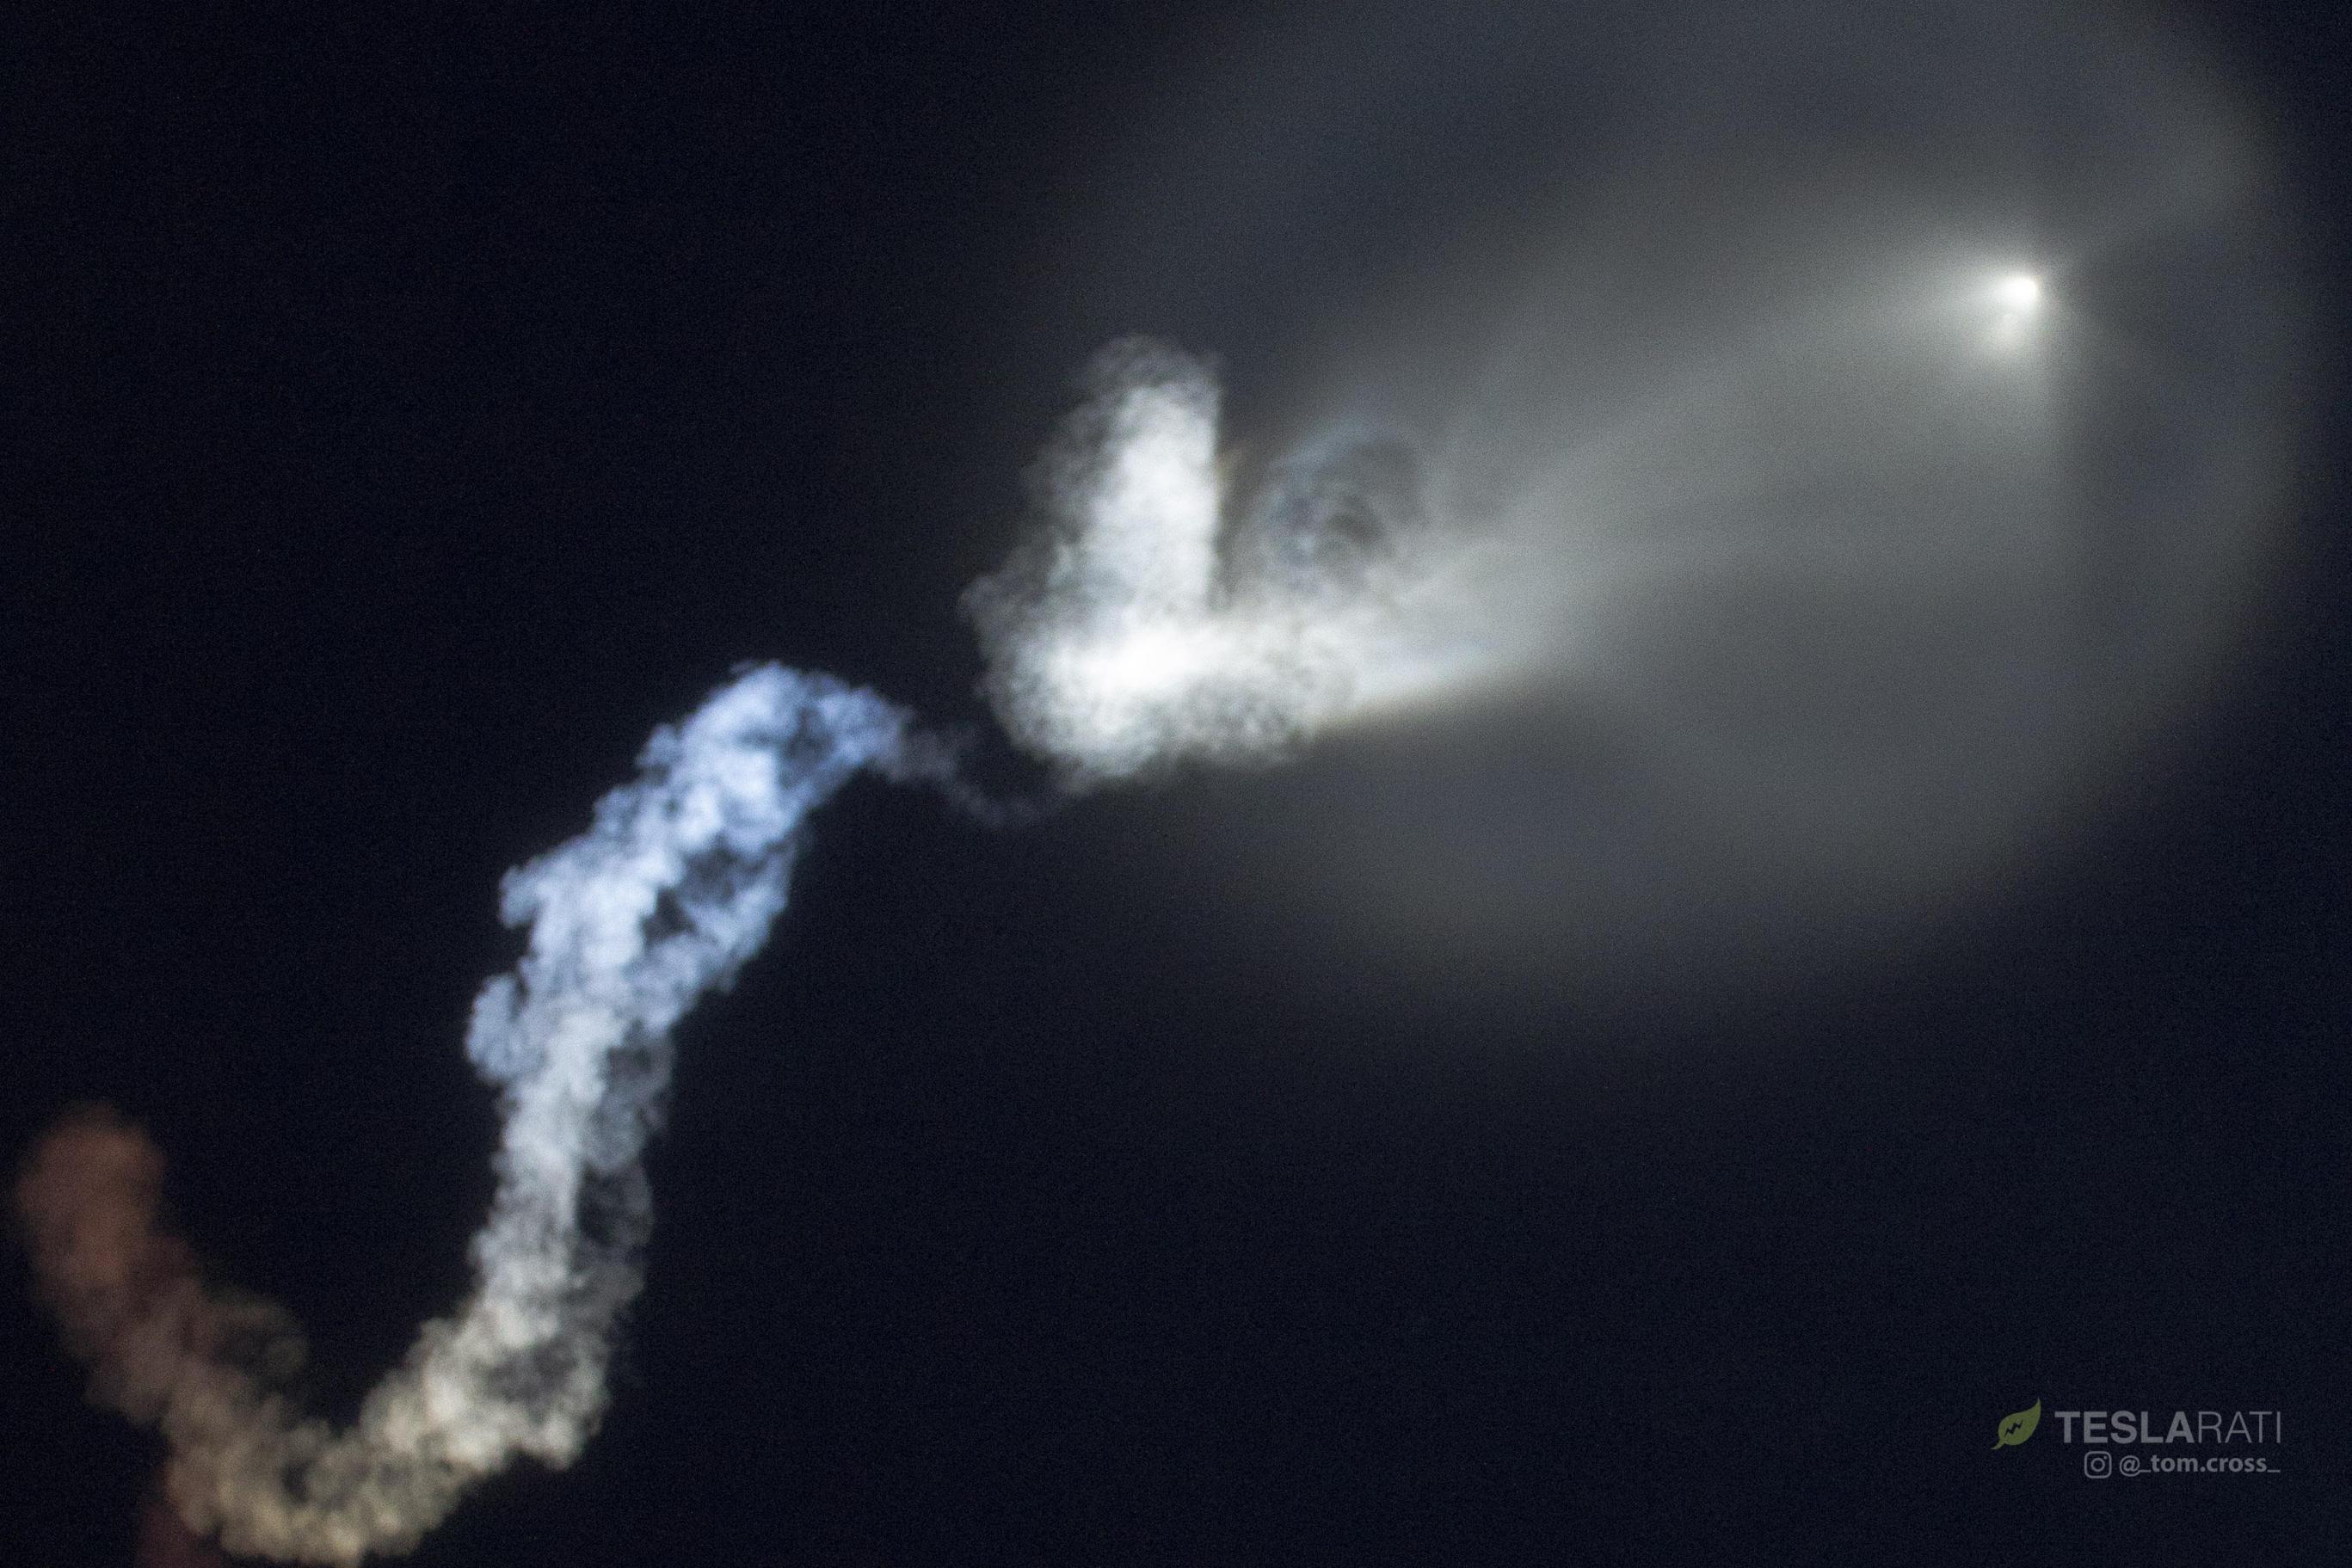 CRS-15 launch plume (Tom Cross) 5(c)